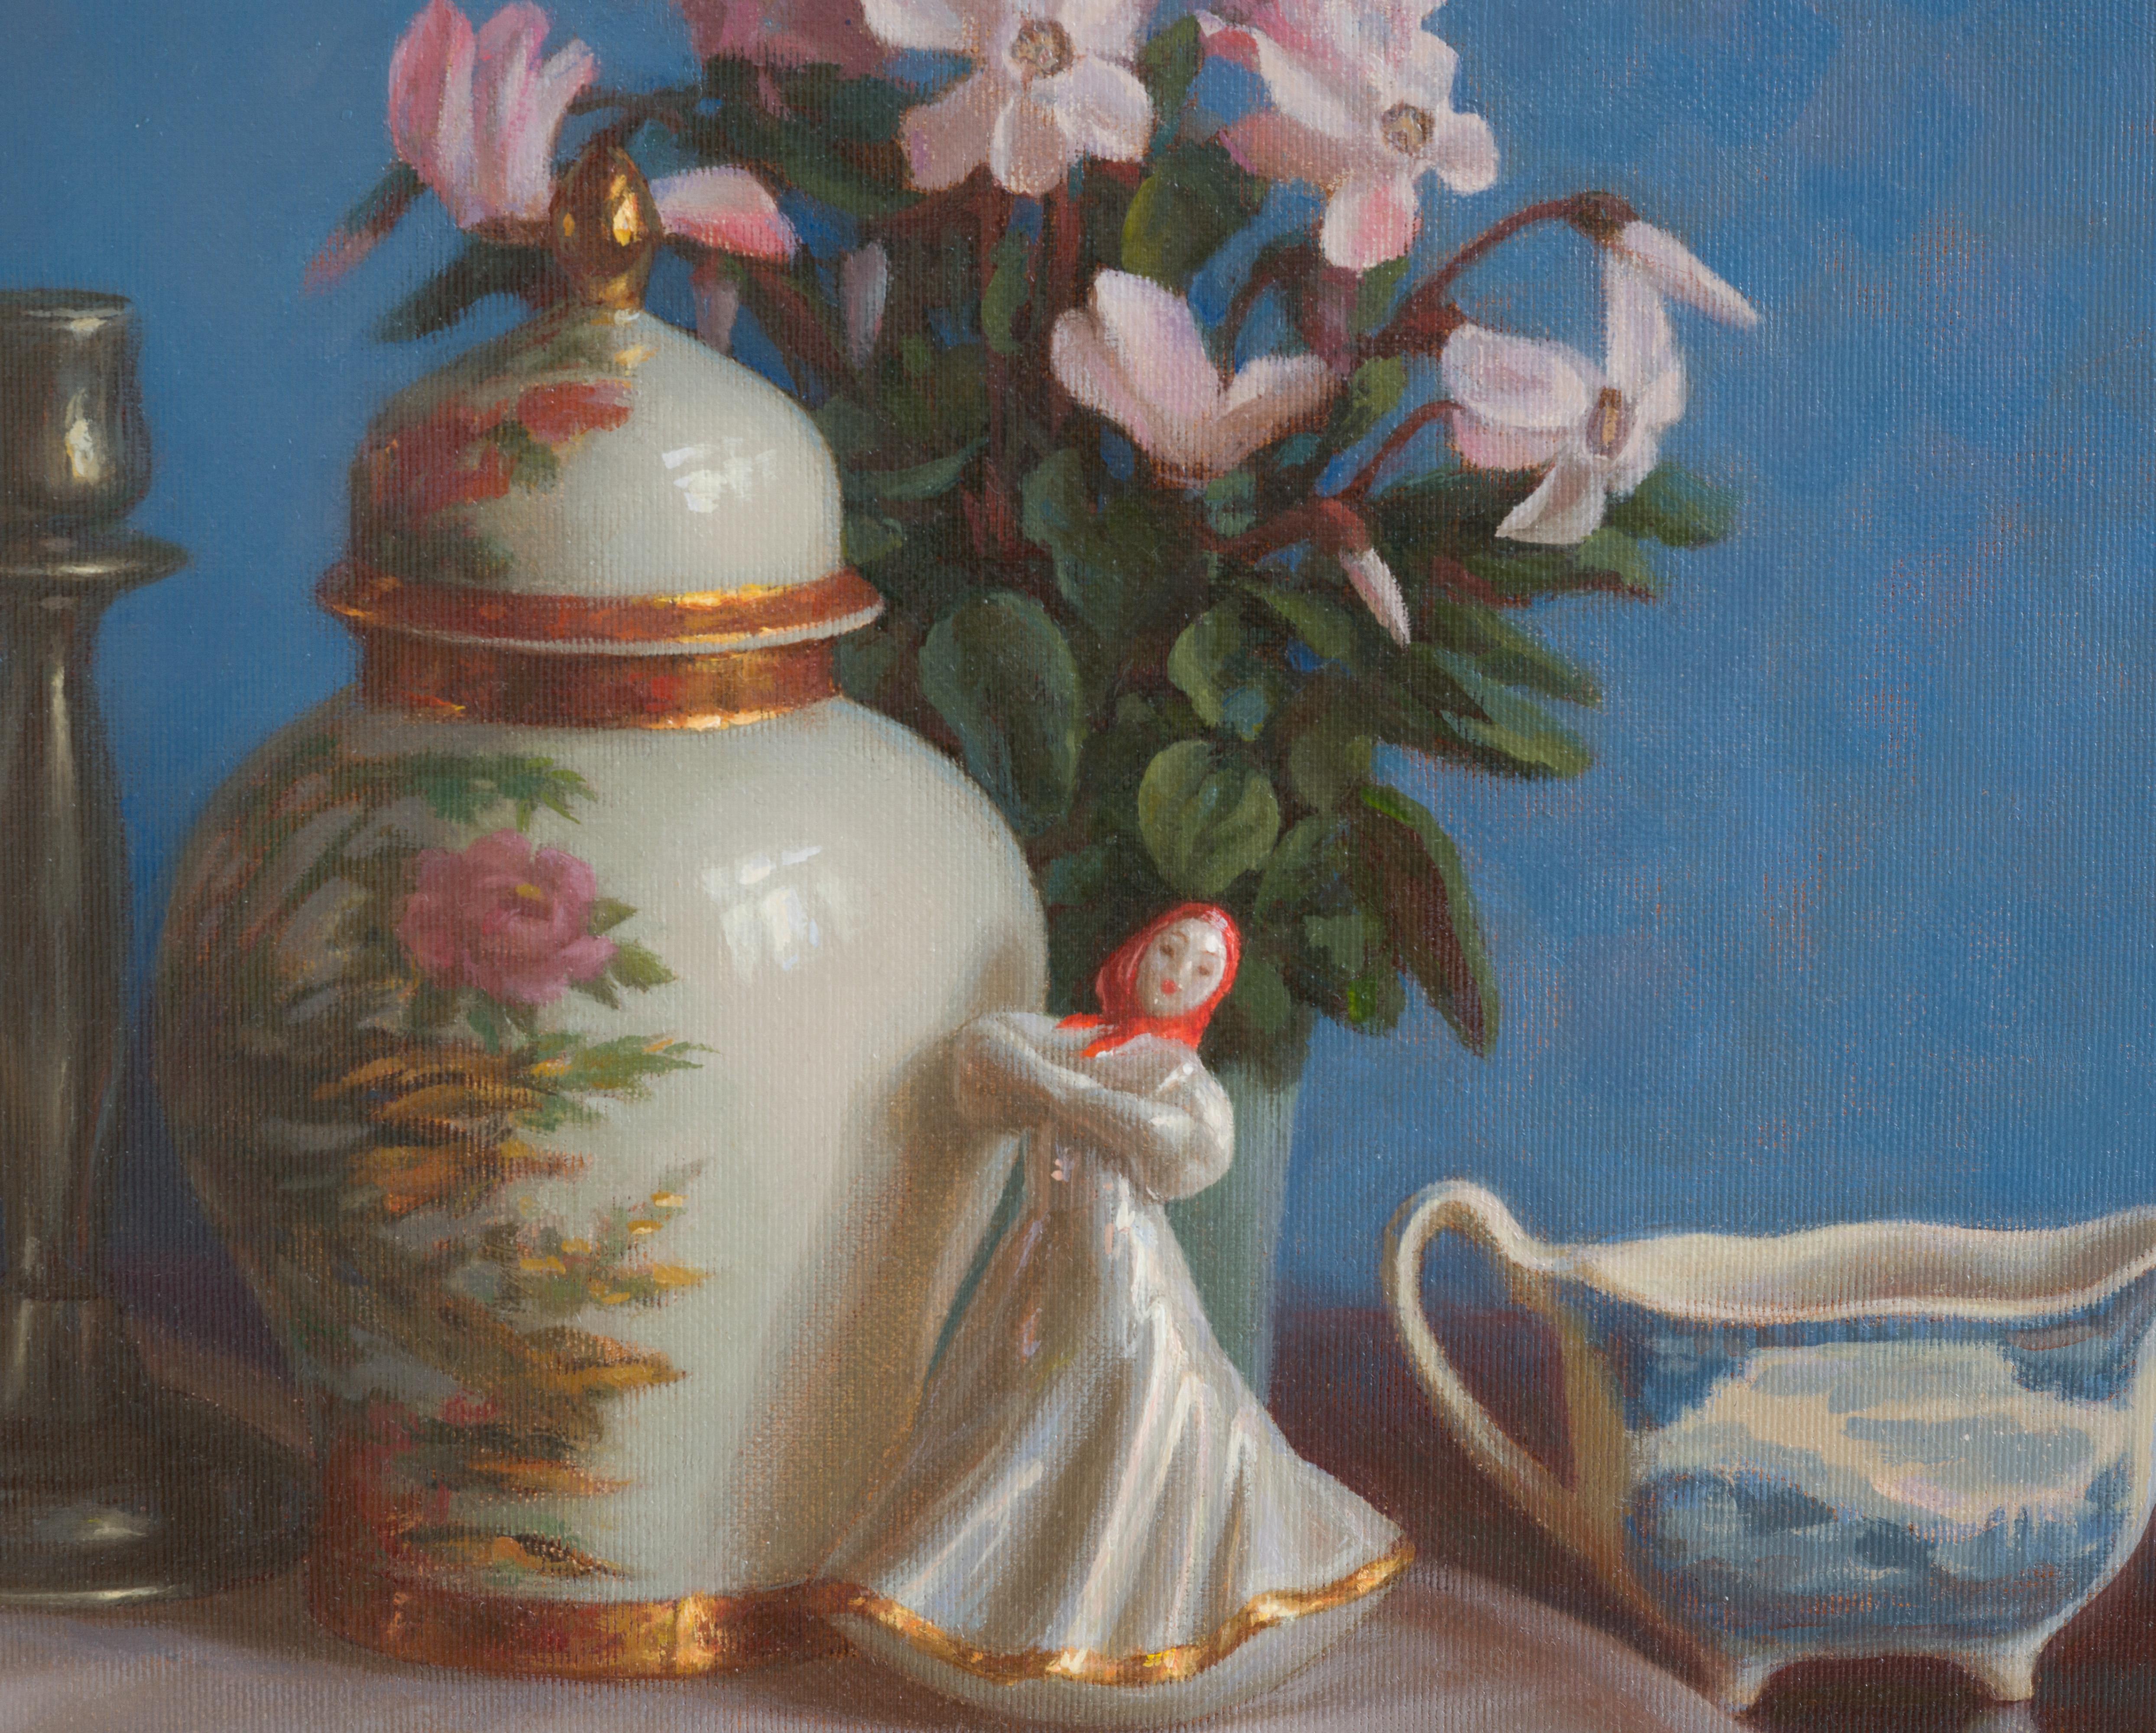 Porcelain - Realist Painting by Irina Trushkova